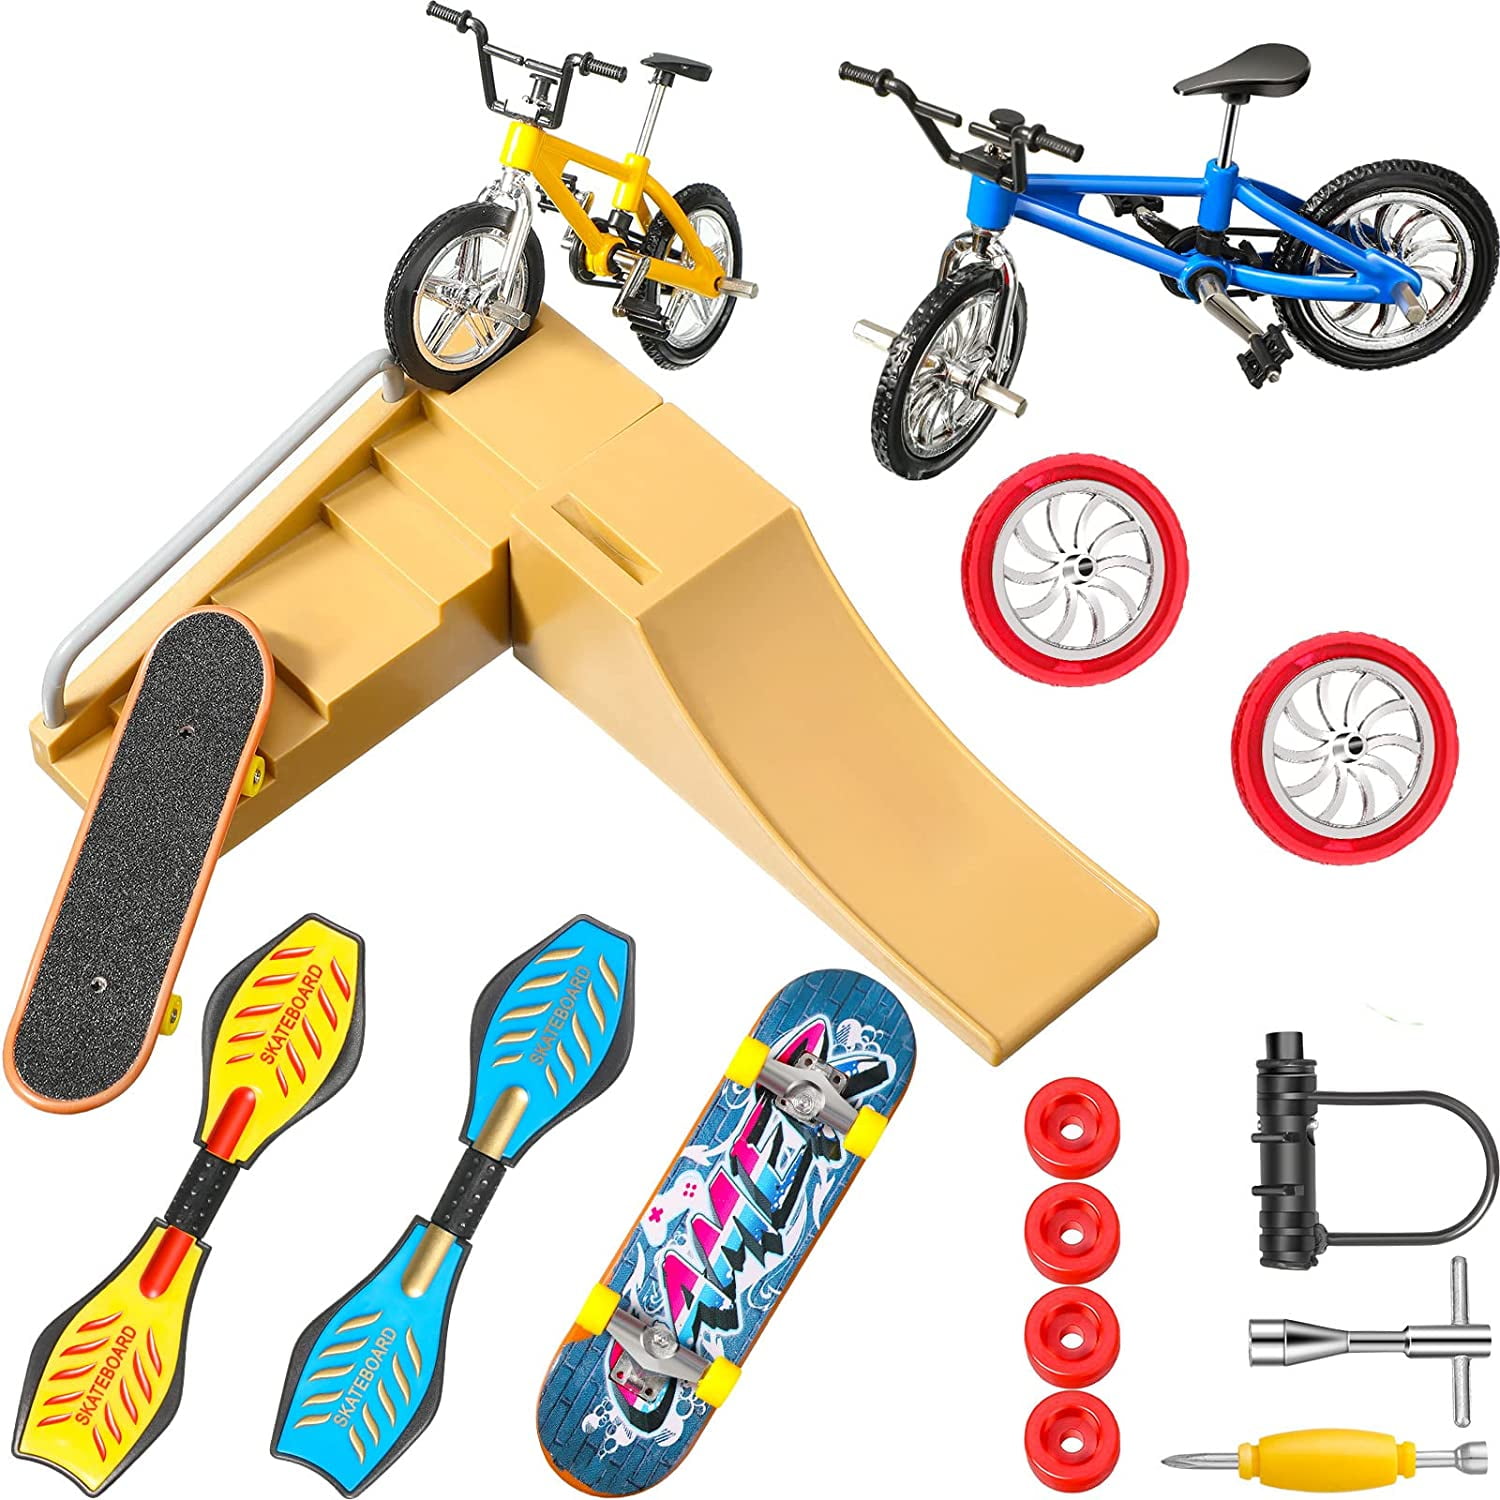 Toy Toy Set Finger Bike & Board Skateboard With Skate Accessories Set 